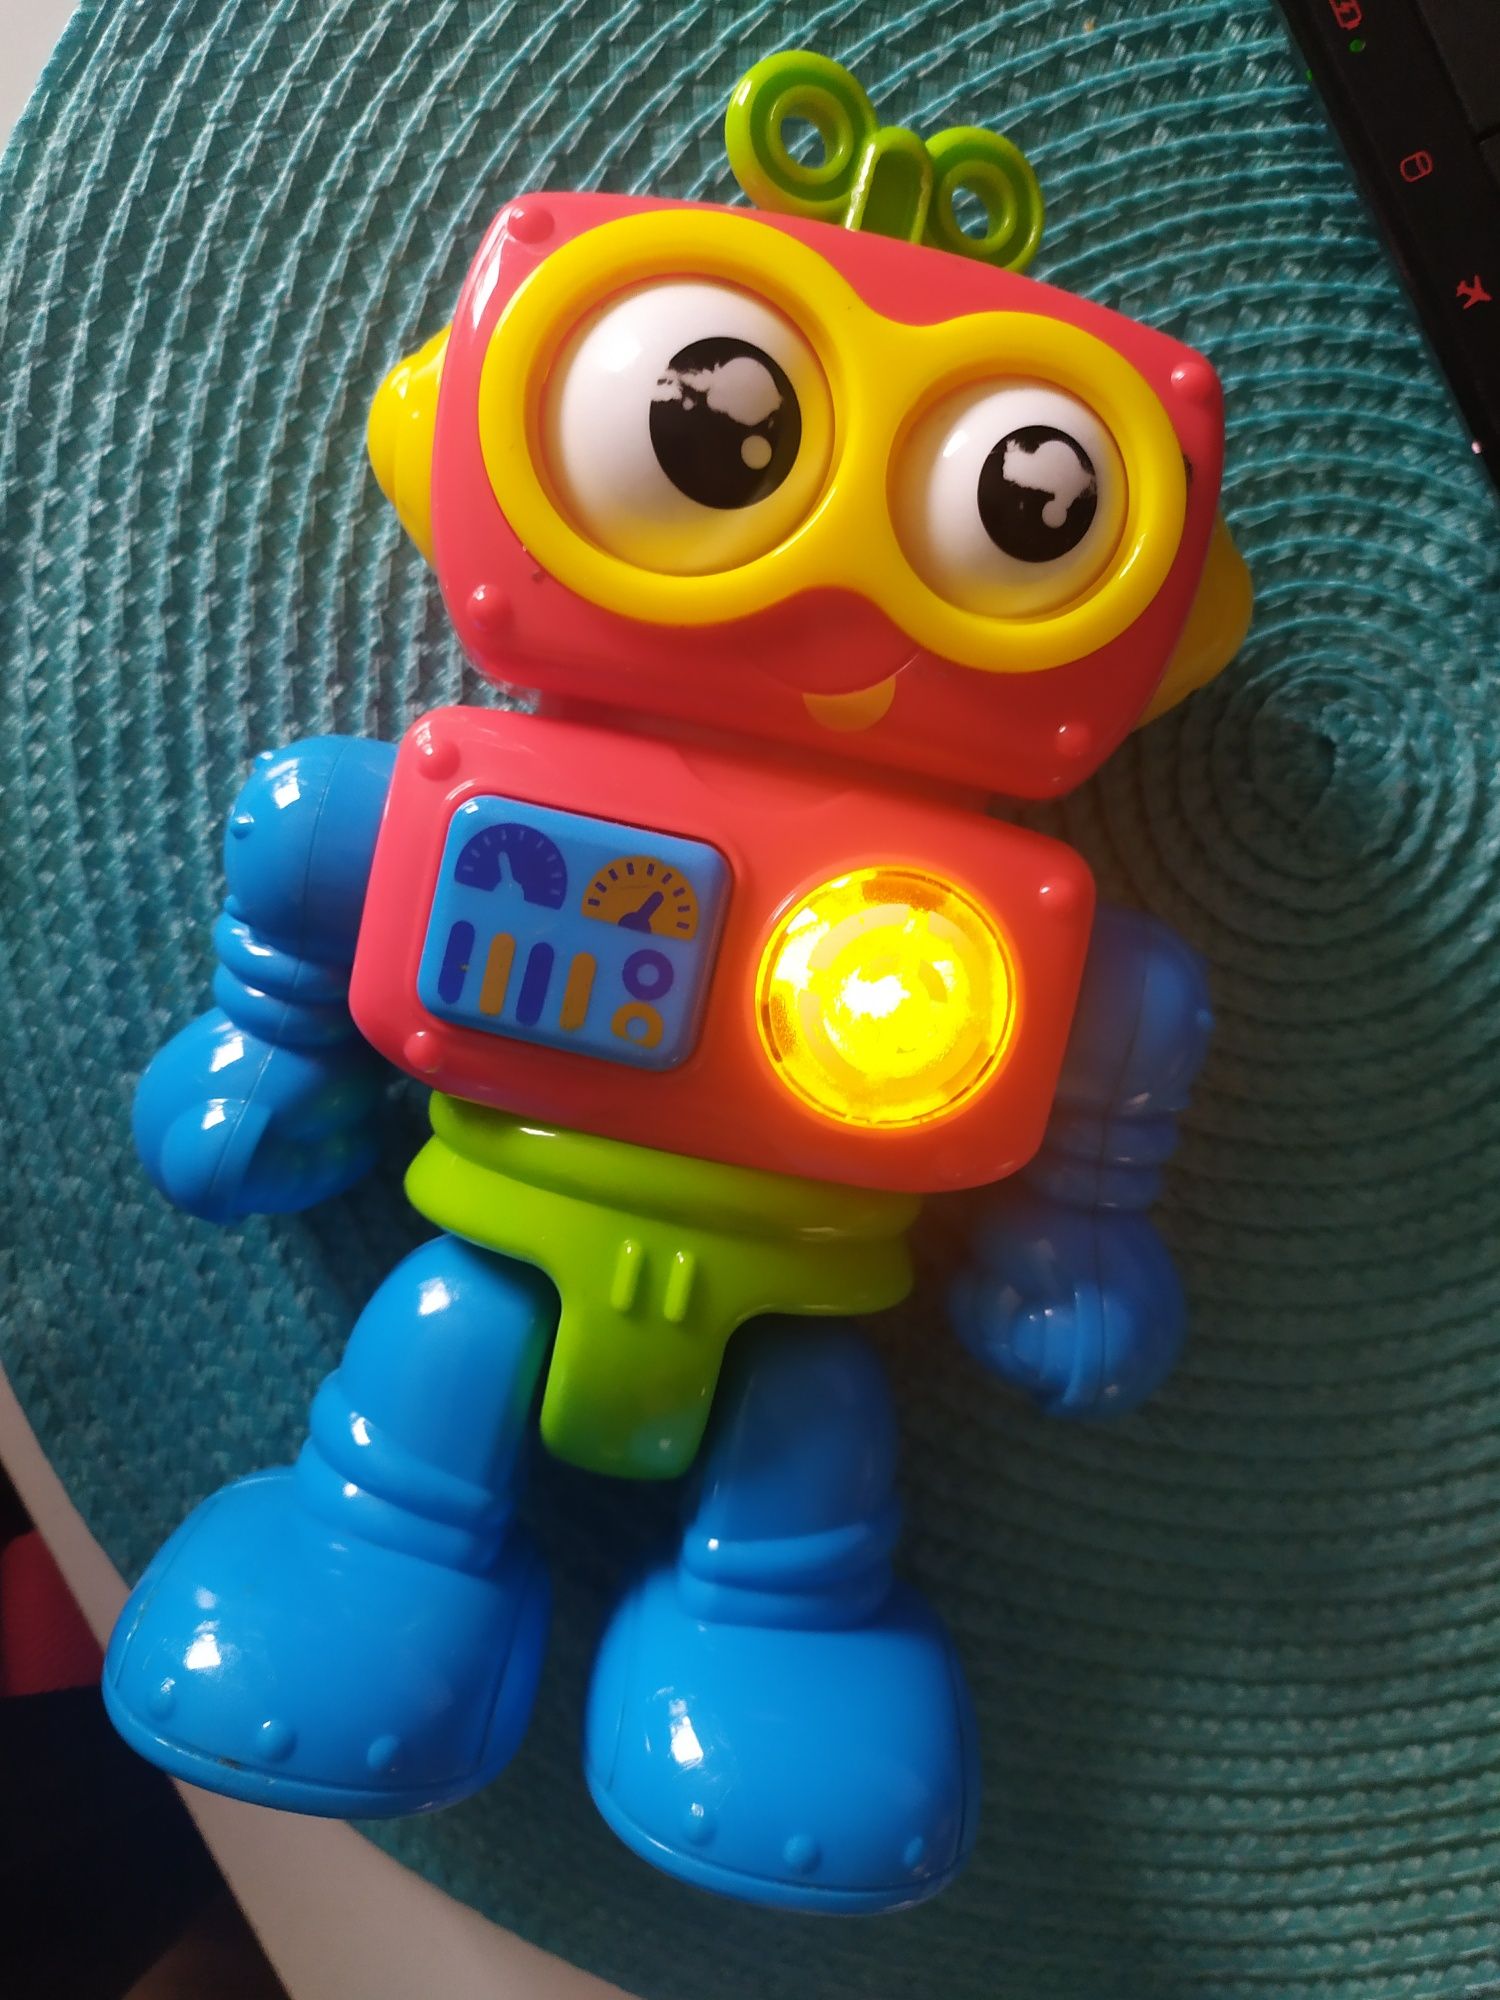 Robot interaktywny zabawka